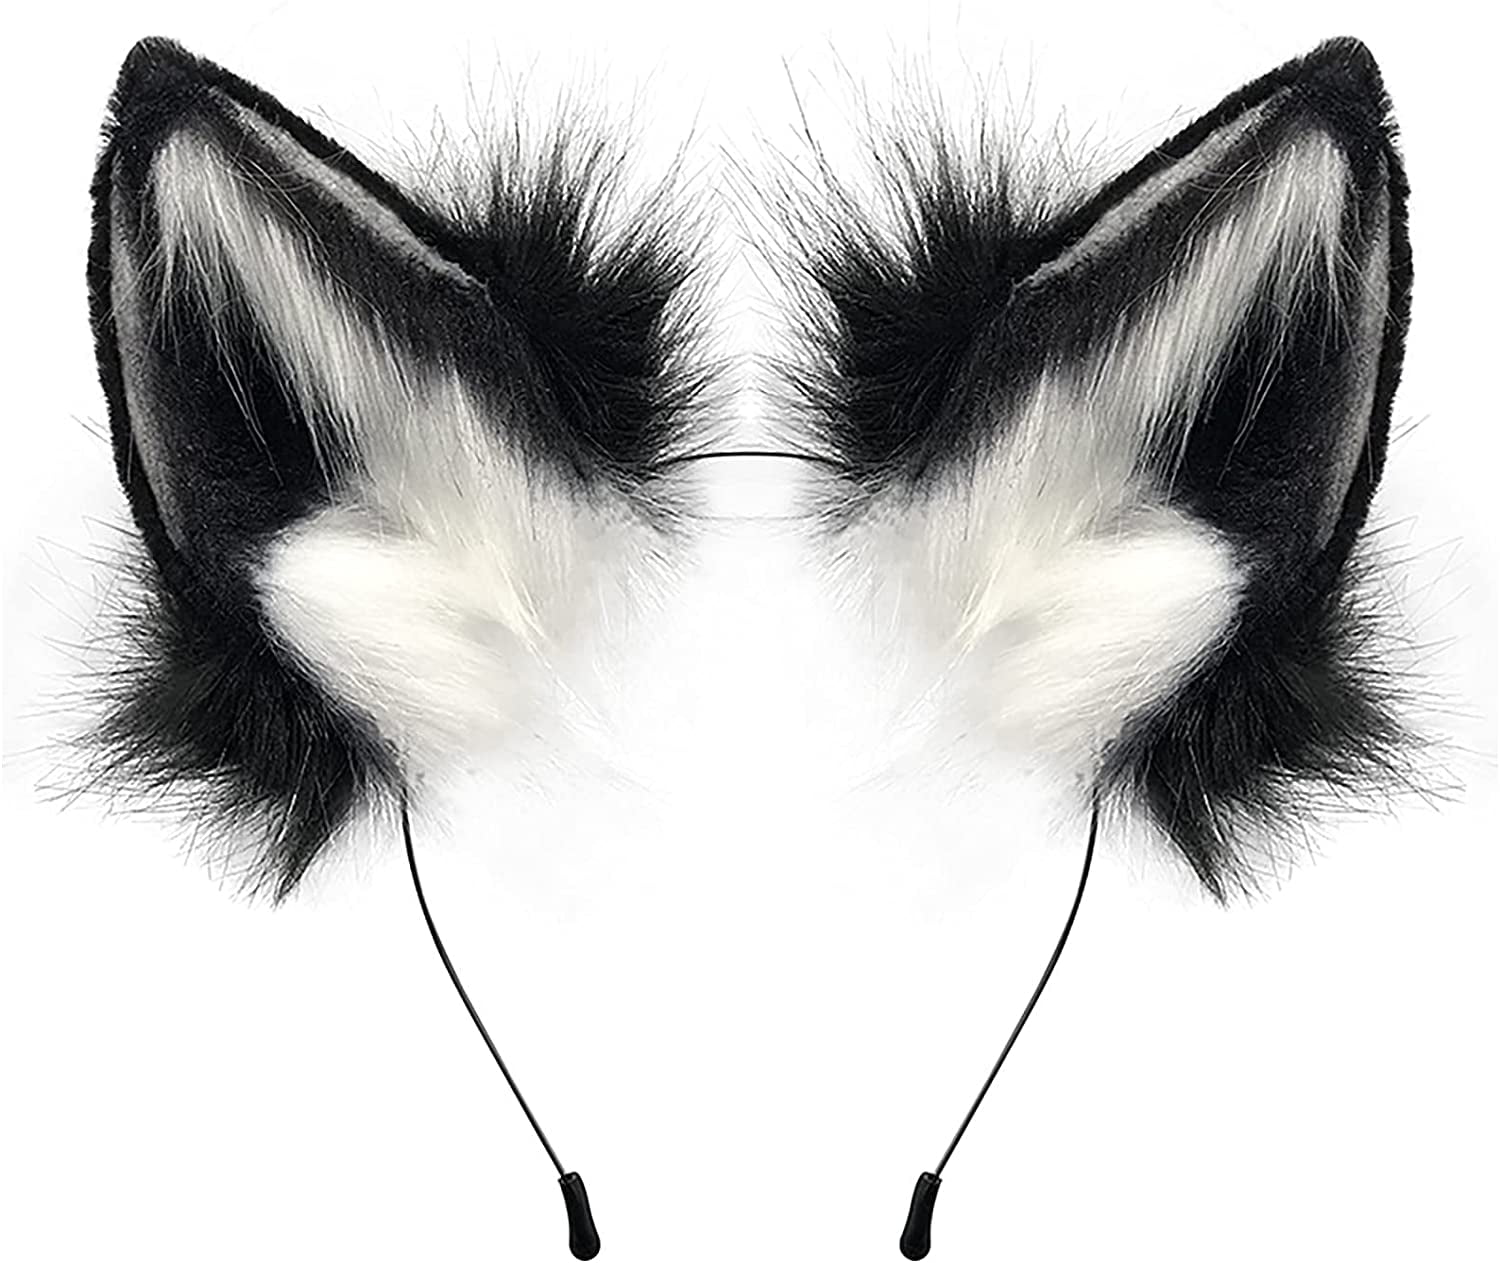 Cat ears Kitty Headwear White/Red Furry Animal Headband Costume Fox Ears